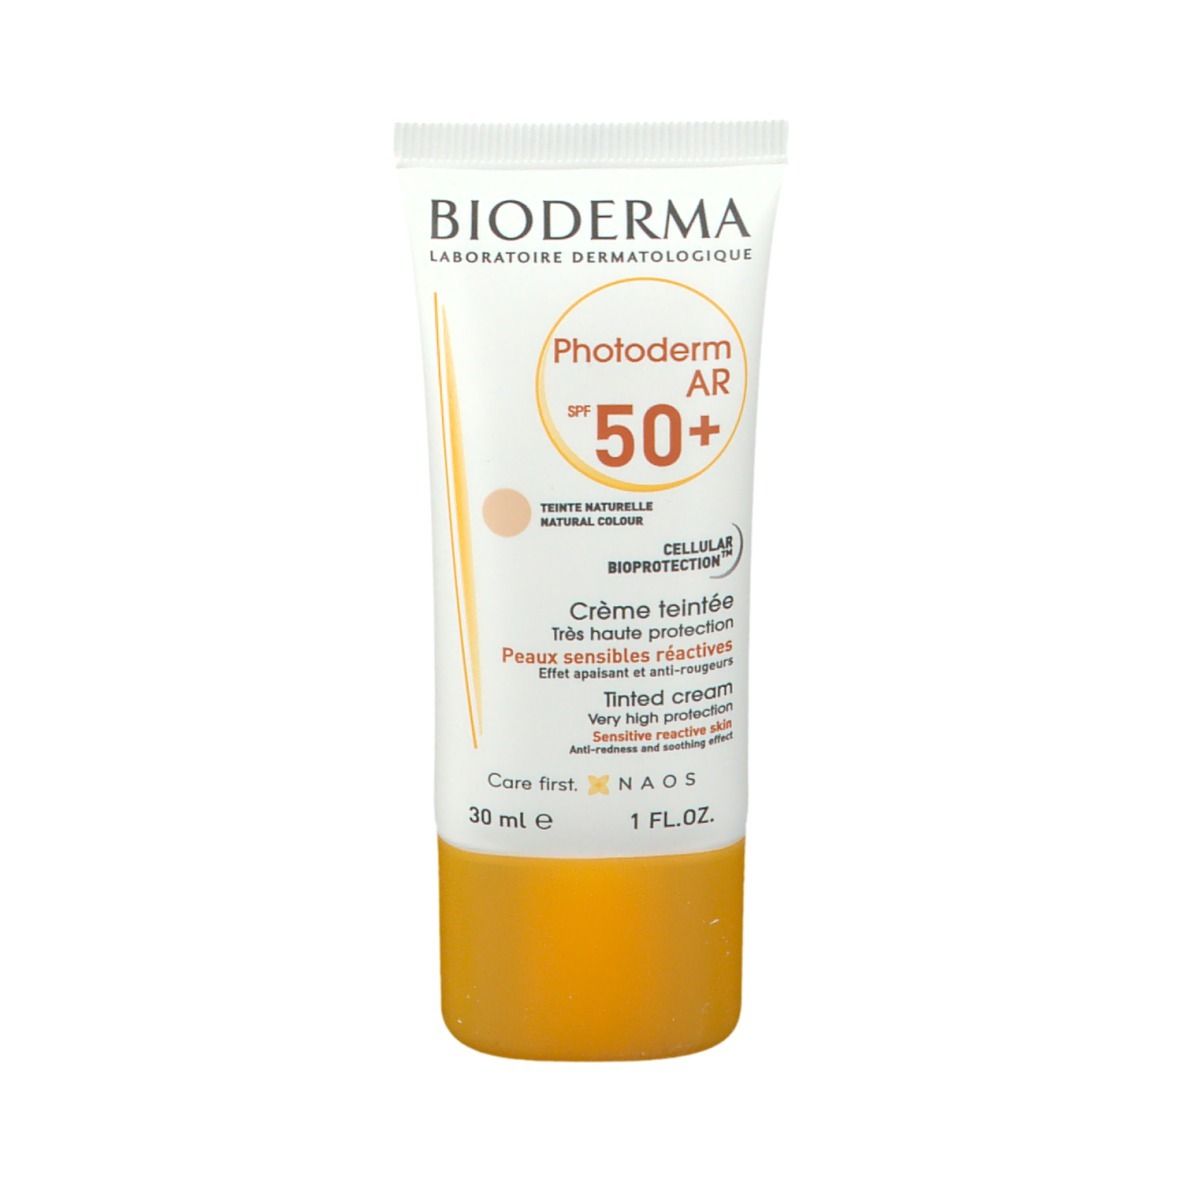 BIODERMA Photoderm AR SPF50+ Crème Teintée